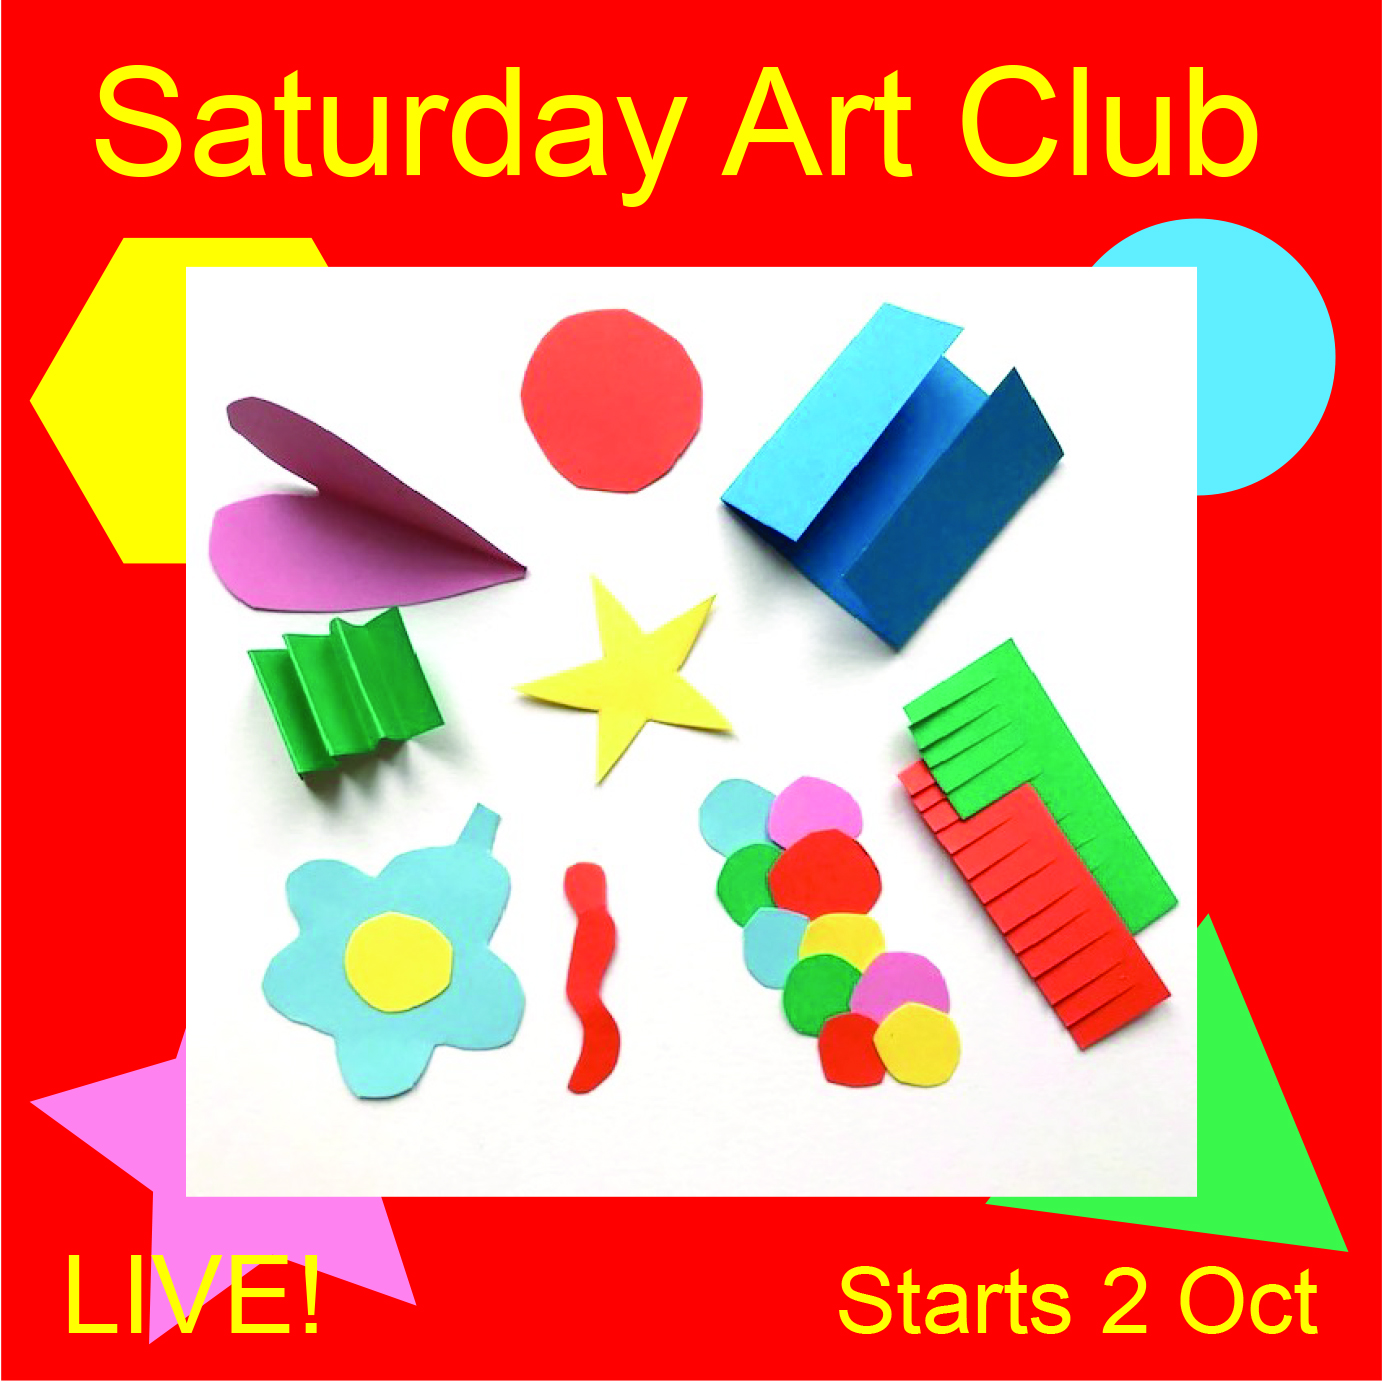 Saturday Art Club at Online